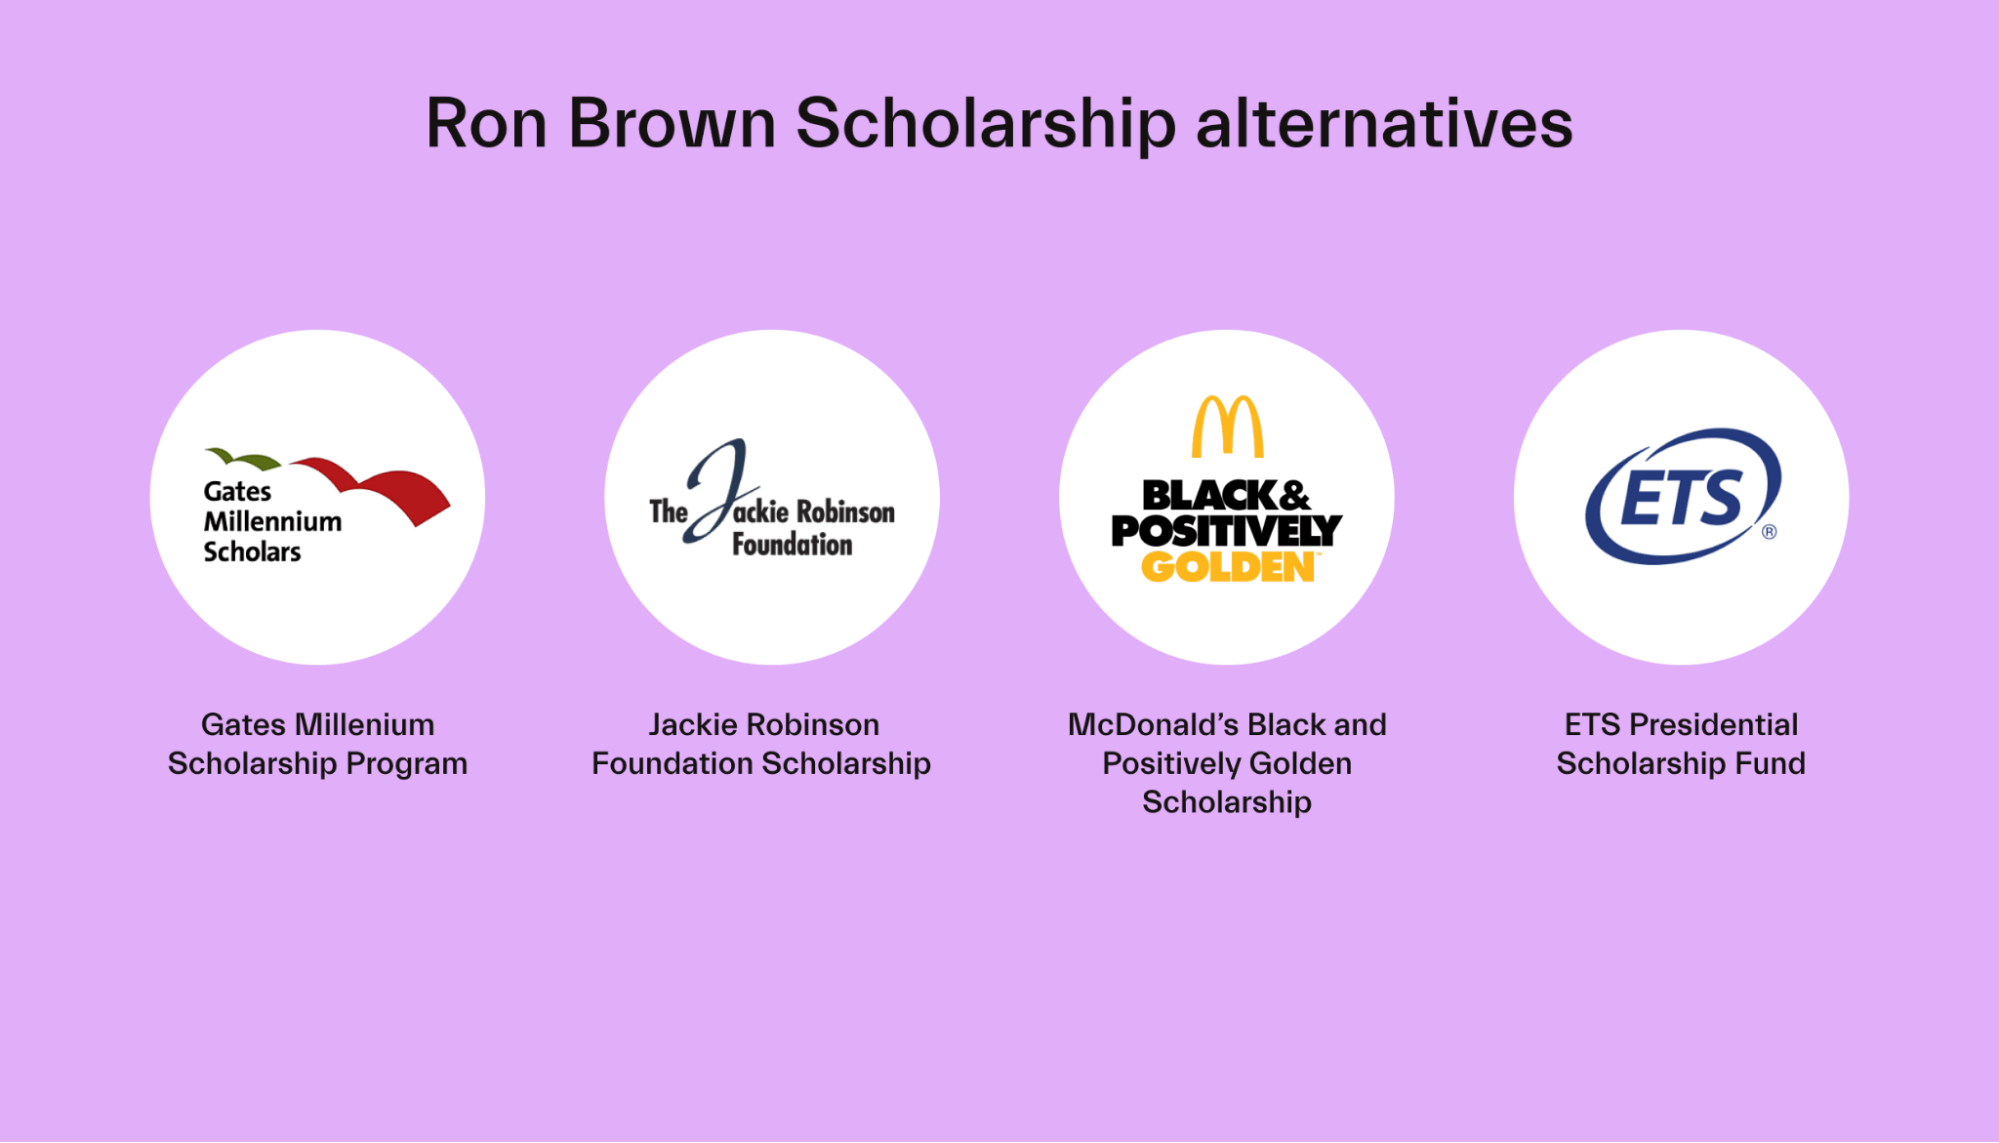 Ron Brown Scholarship alternatives